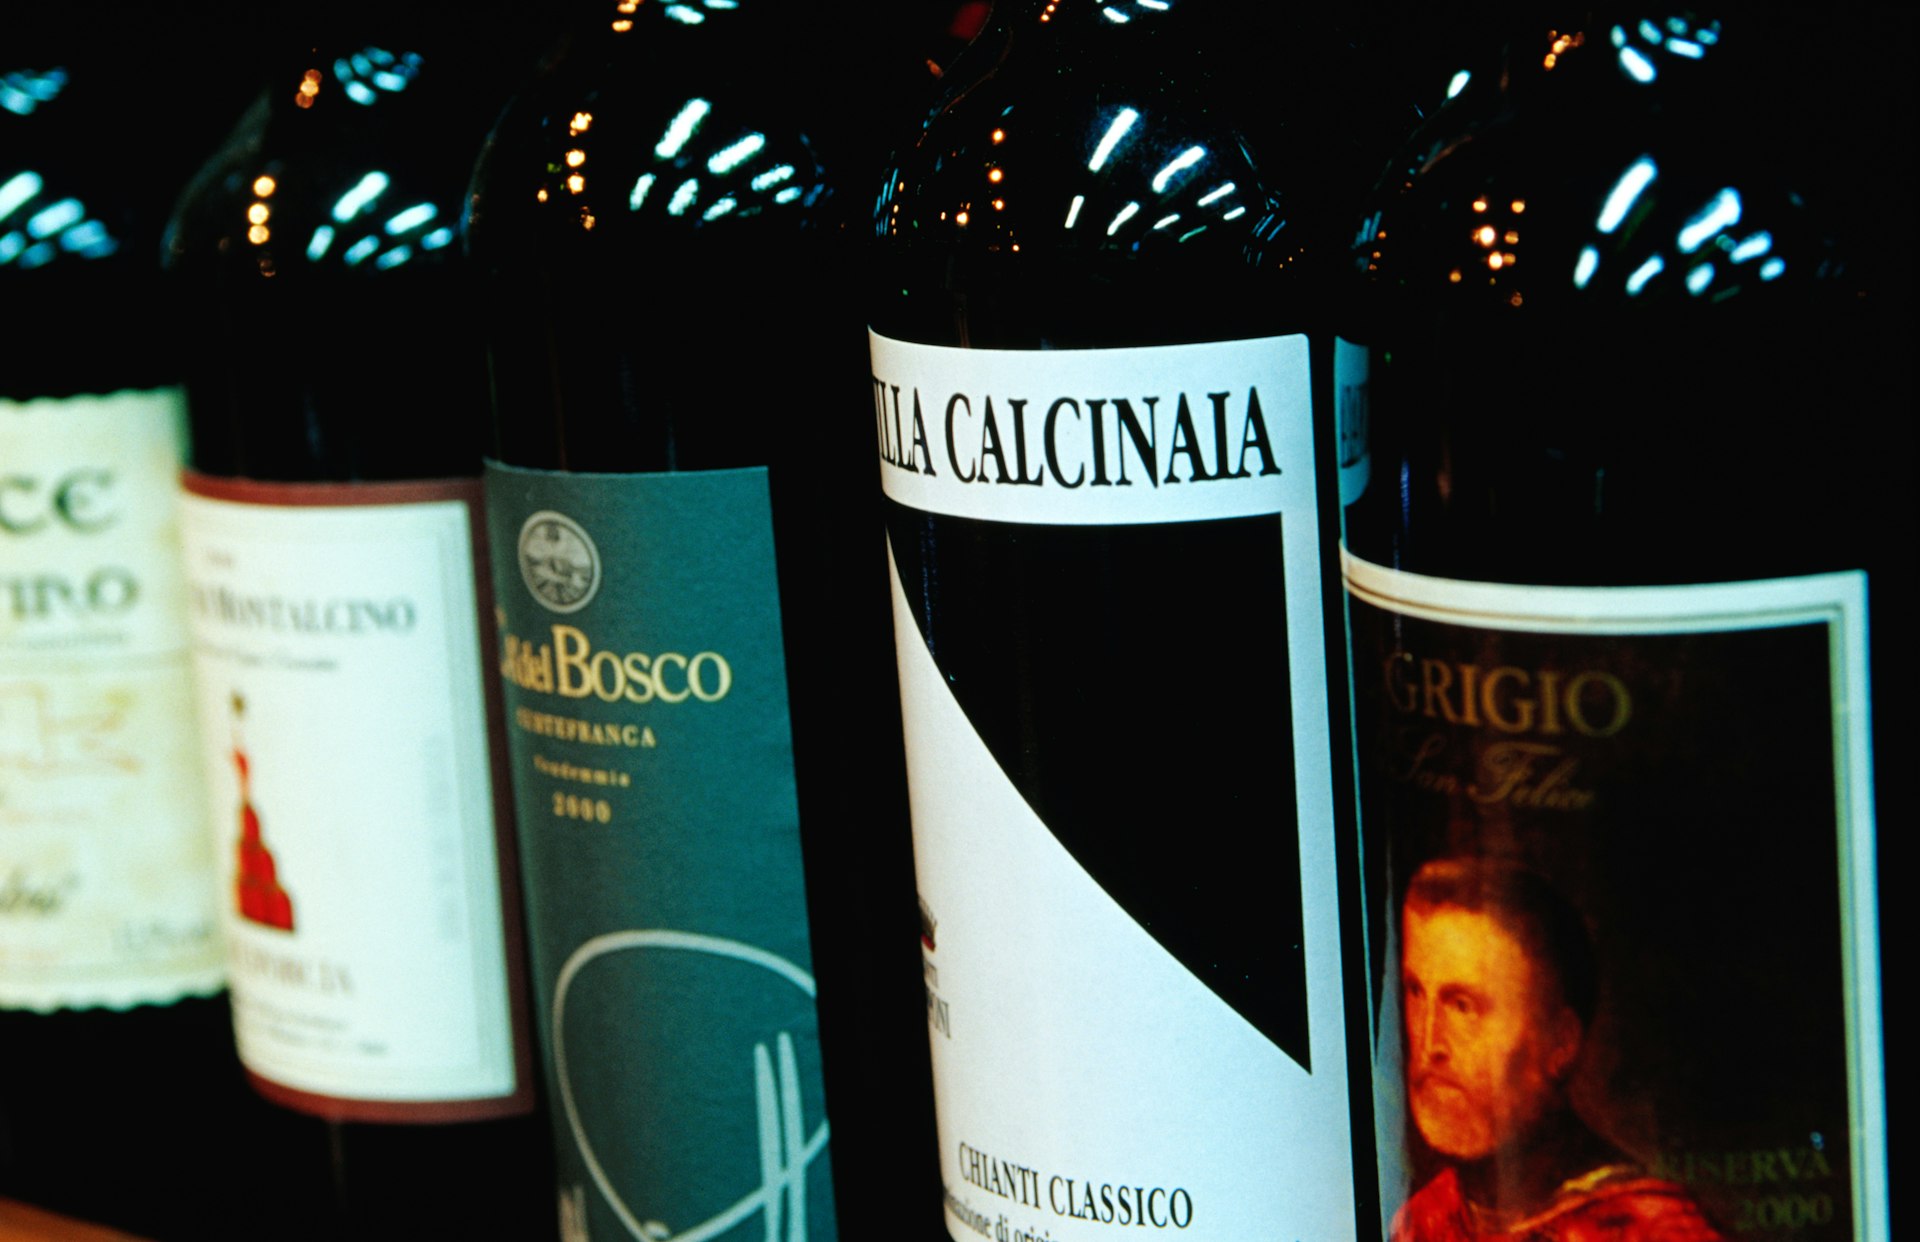 Bottles of wine for sale in Naples